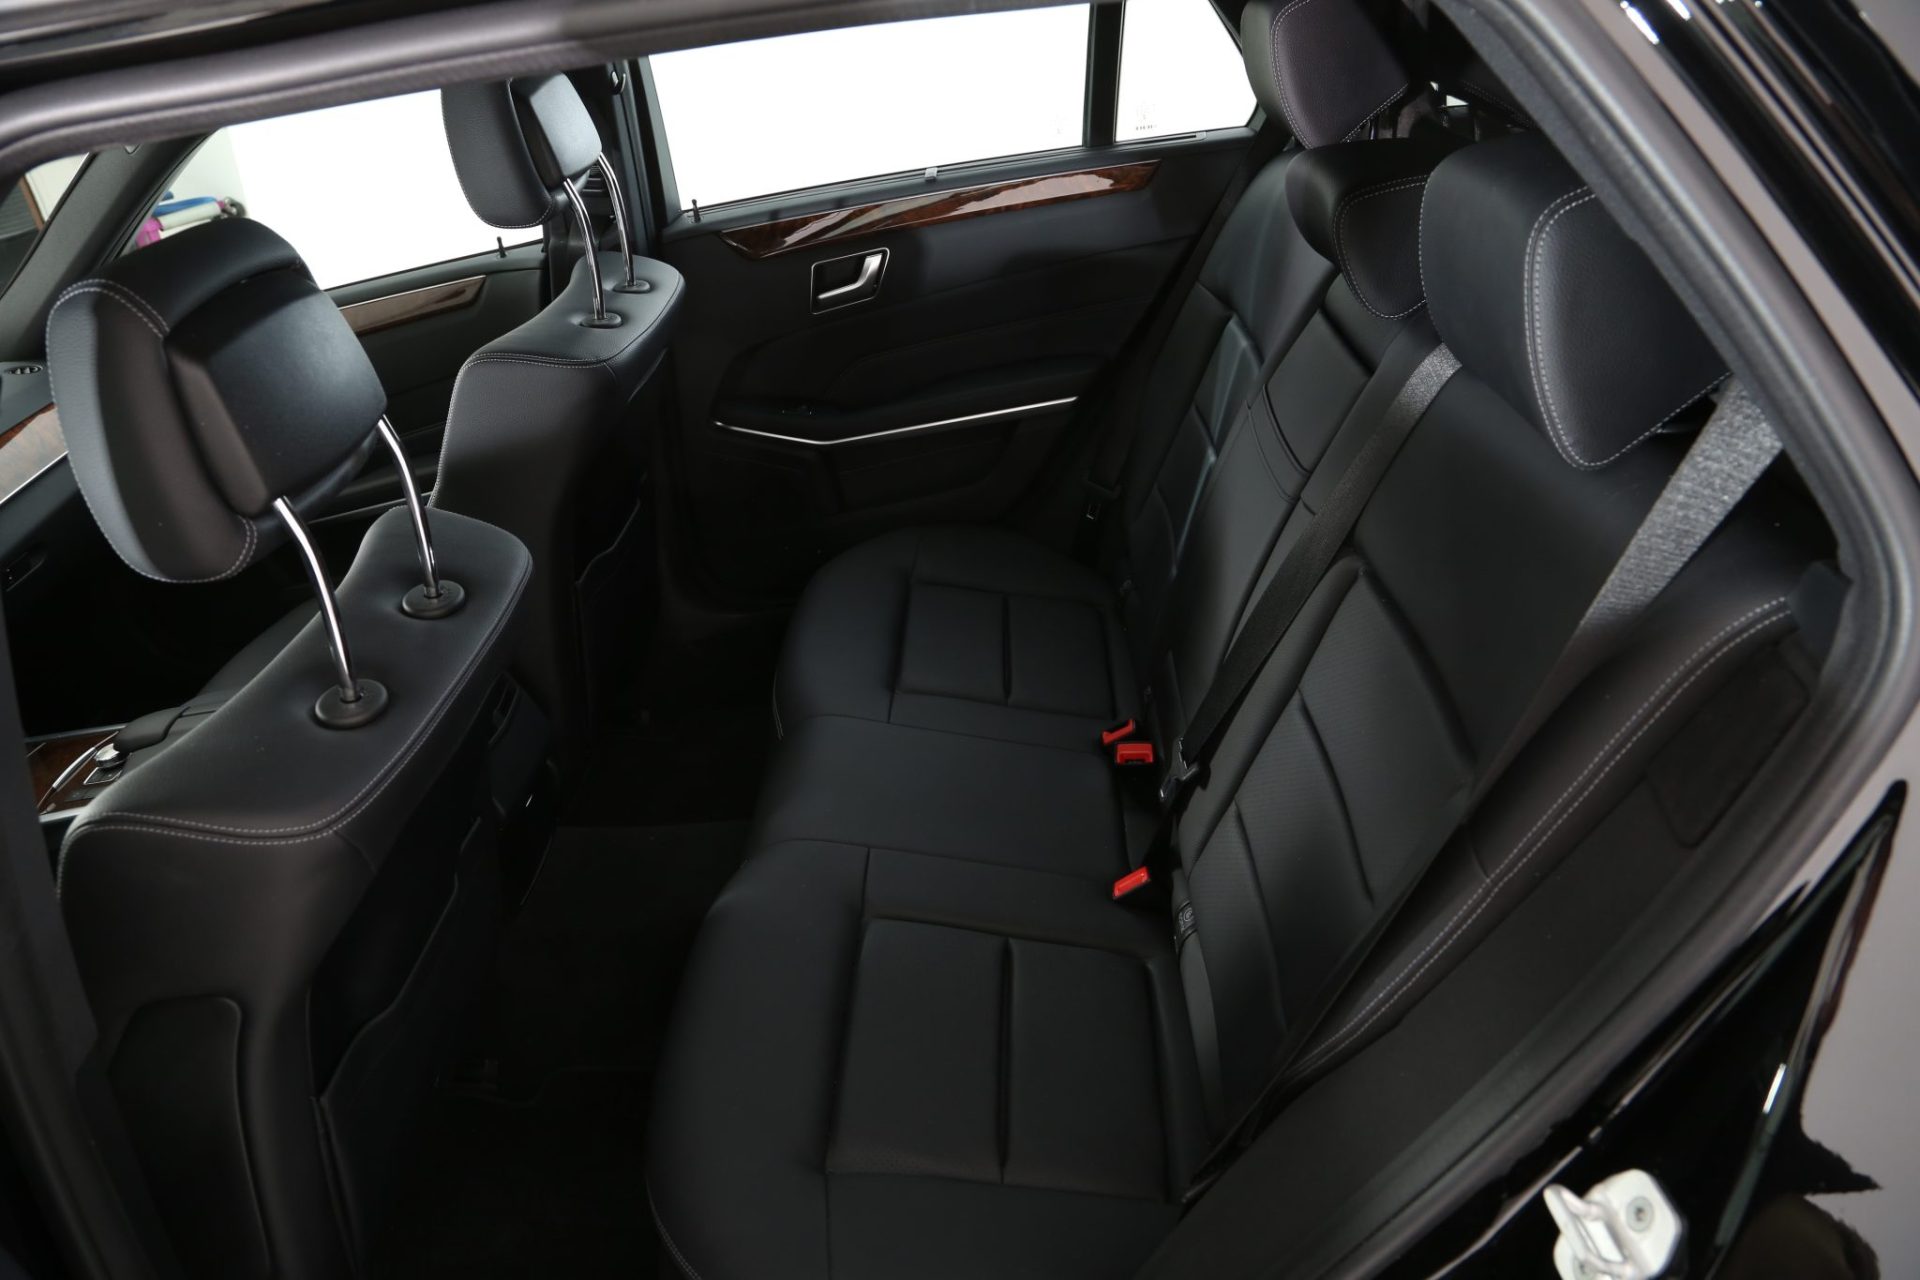 Mercedes Benz S-Class Hearse Limousine - Interior Photo #8